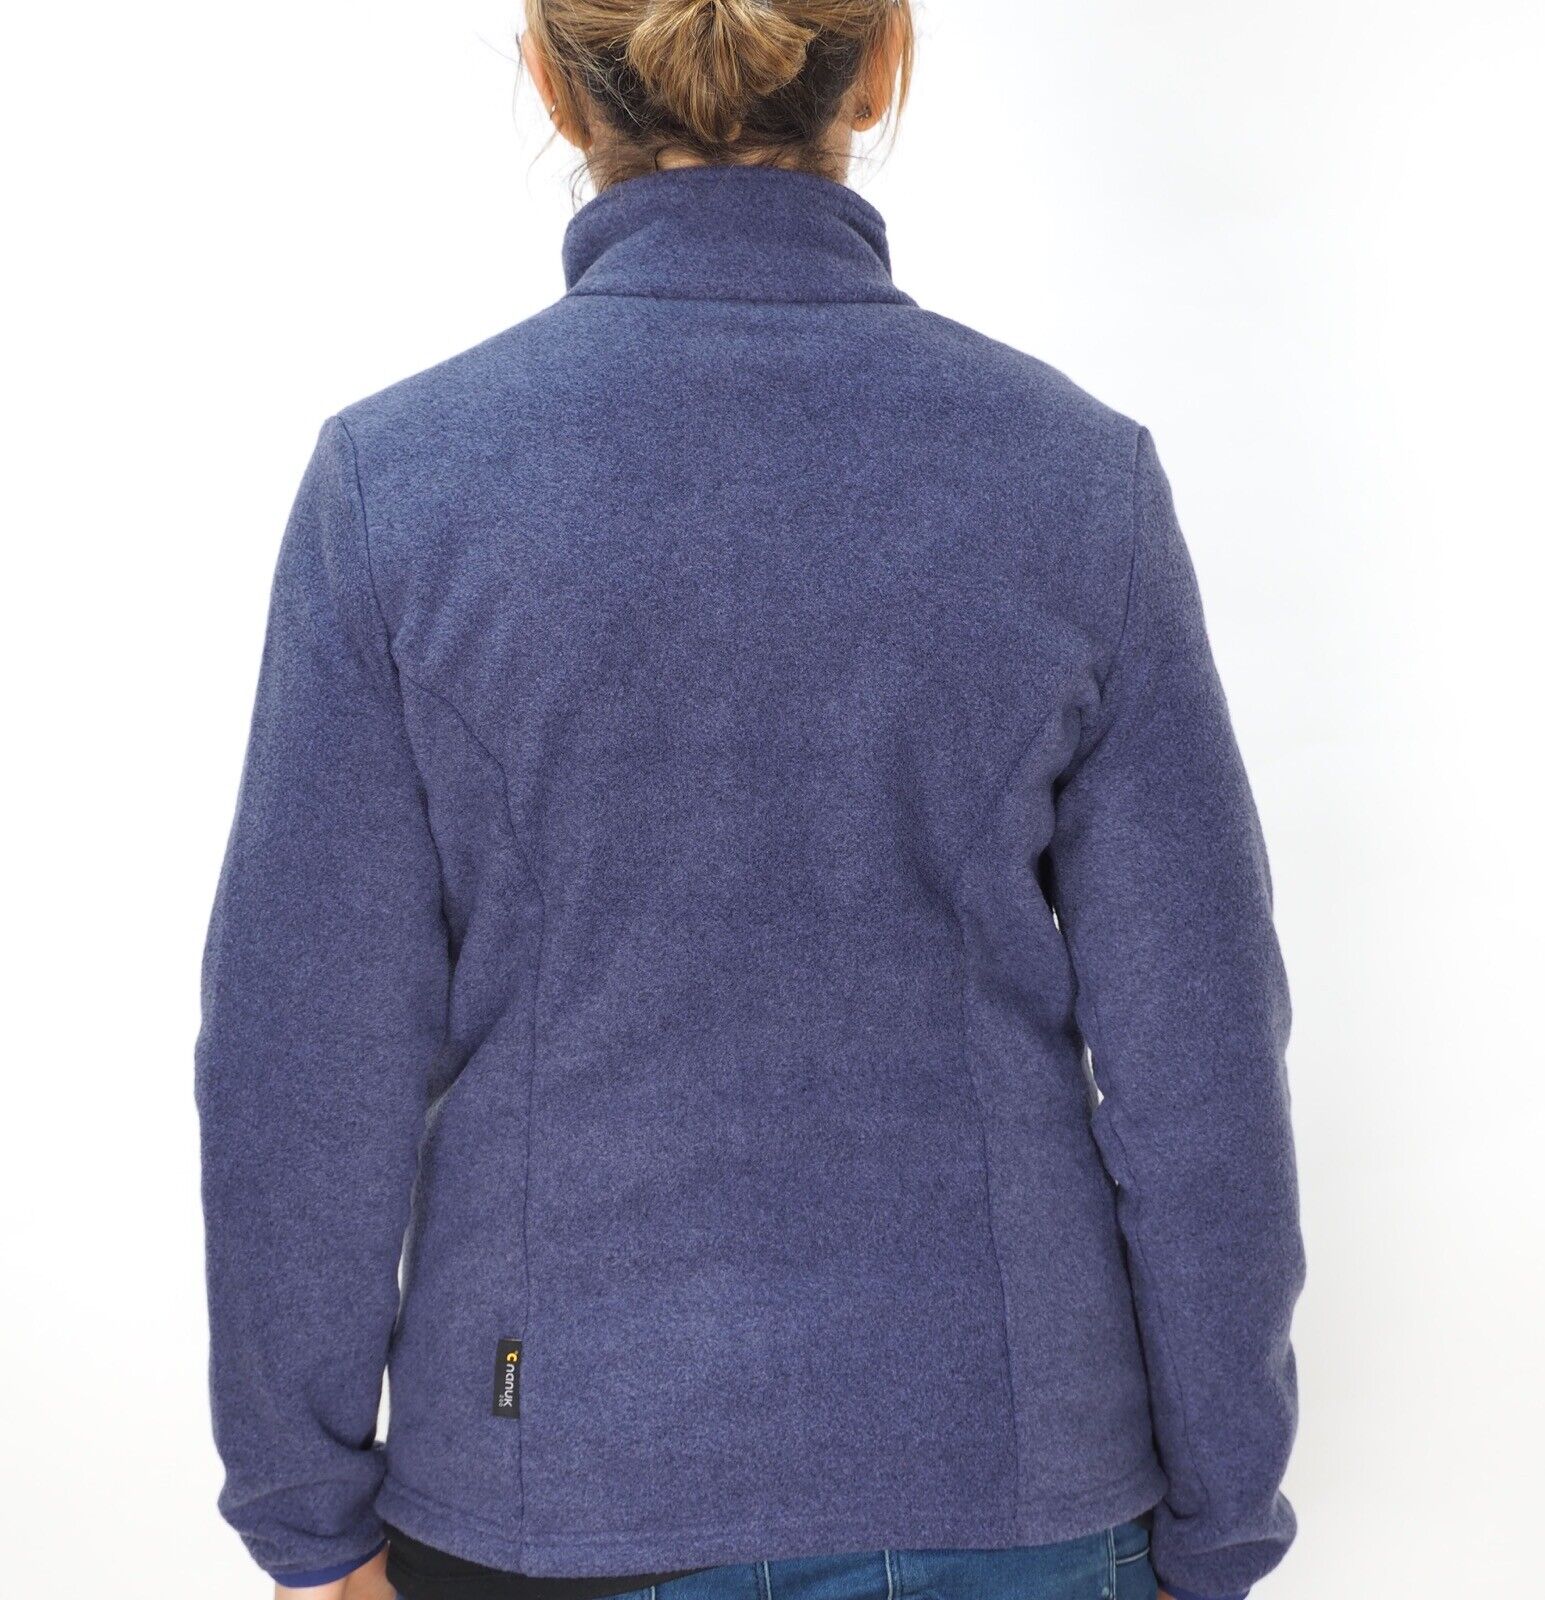 Womens Jack Wolfskin Nanuk 1707661 Dark Plum Soft Warm Fleece Zip Up Sweatshirt - London Top Style